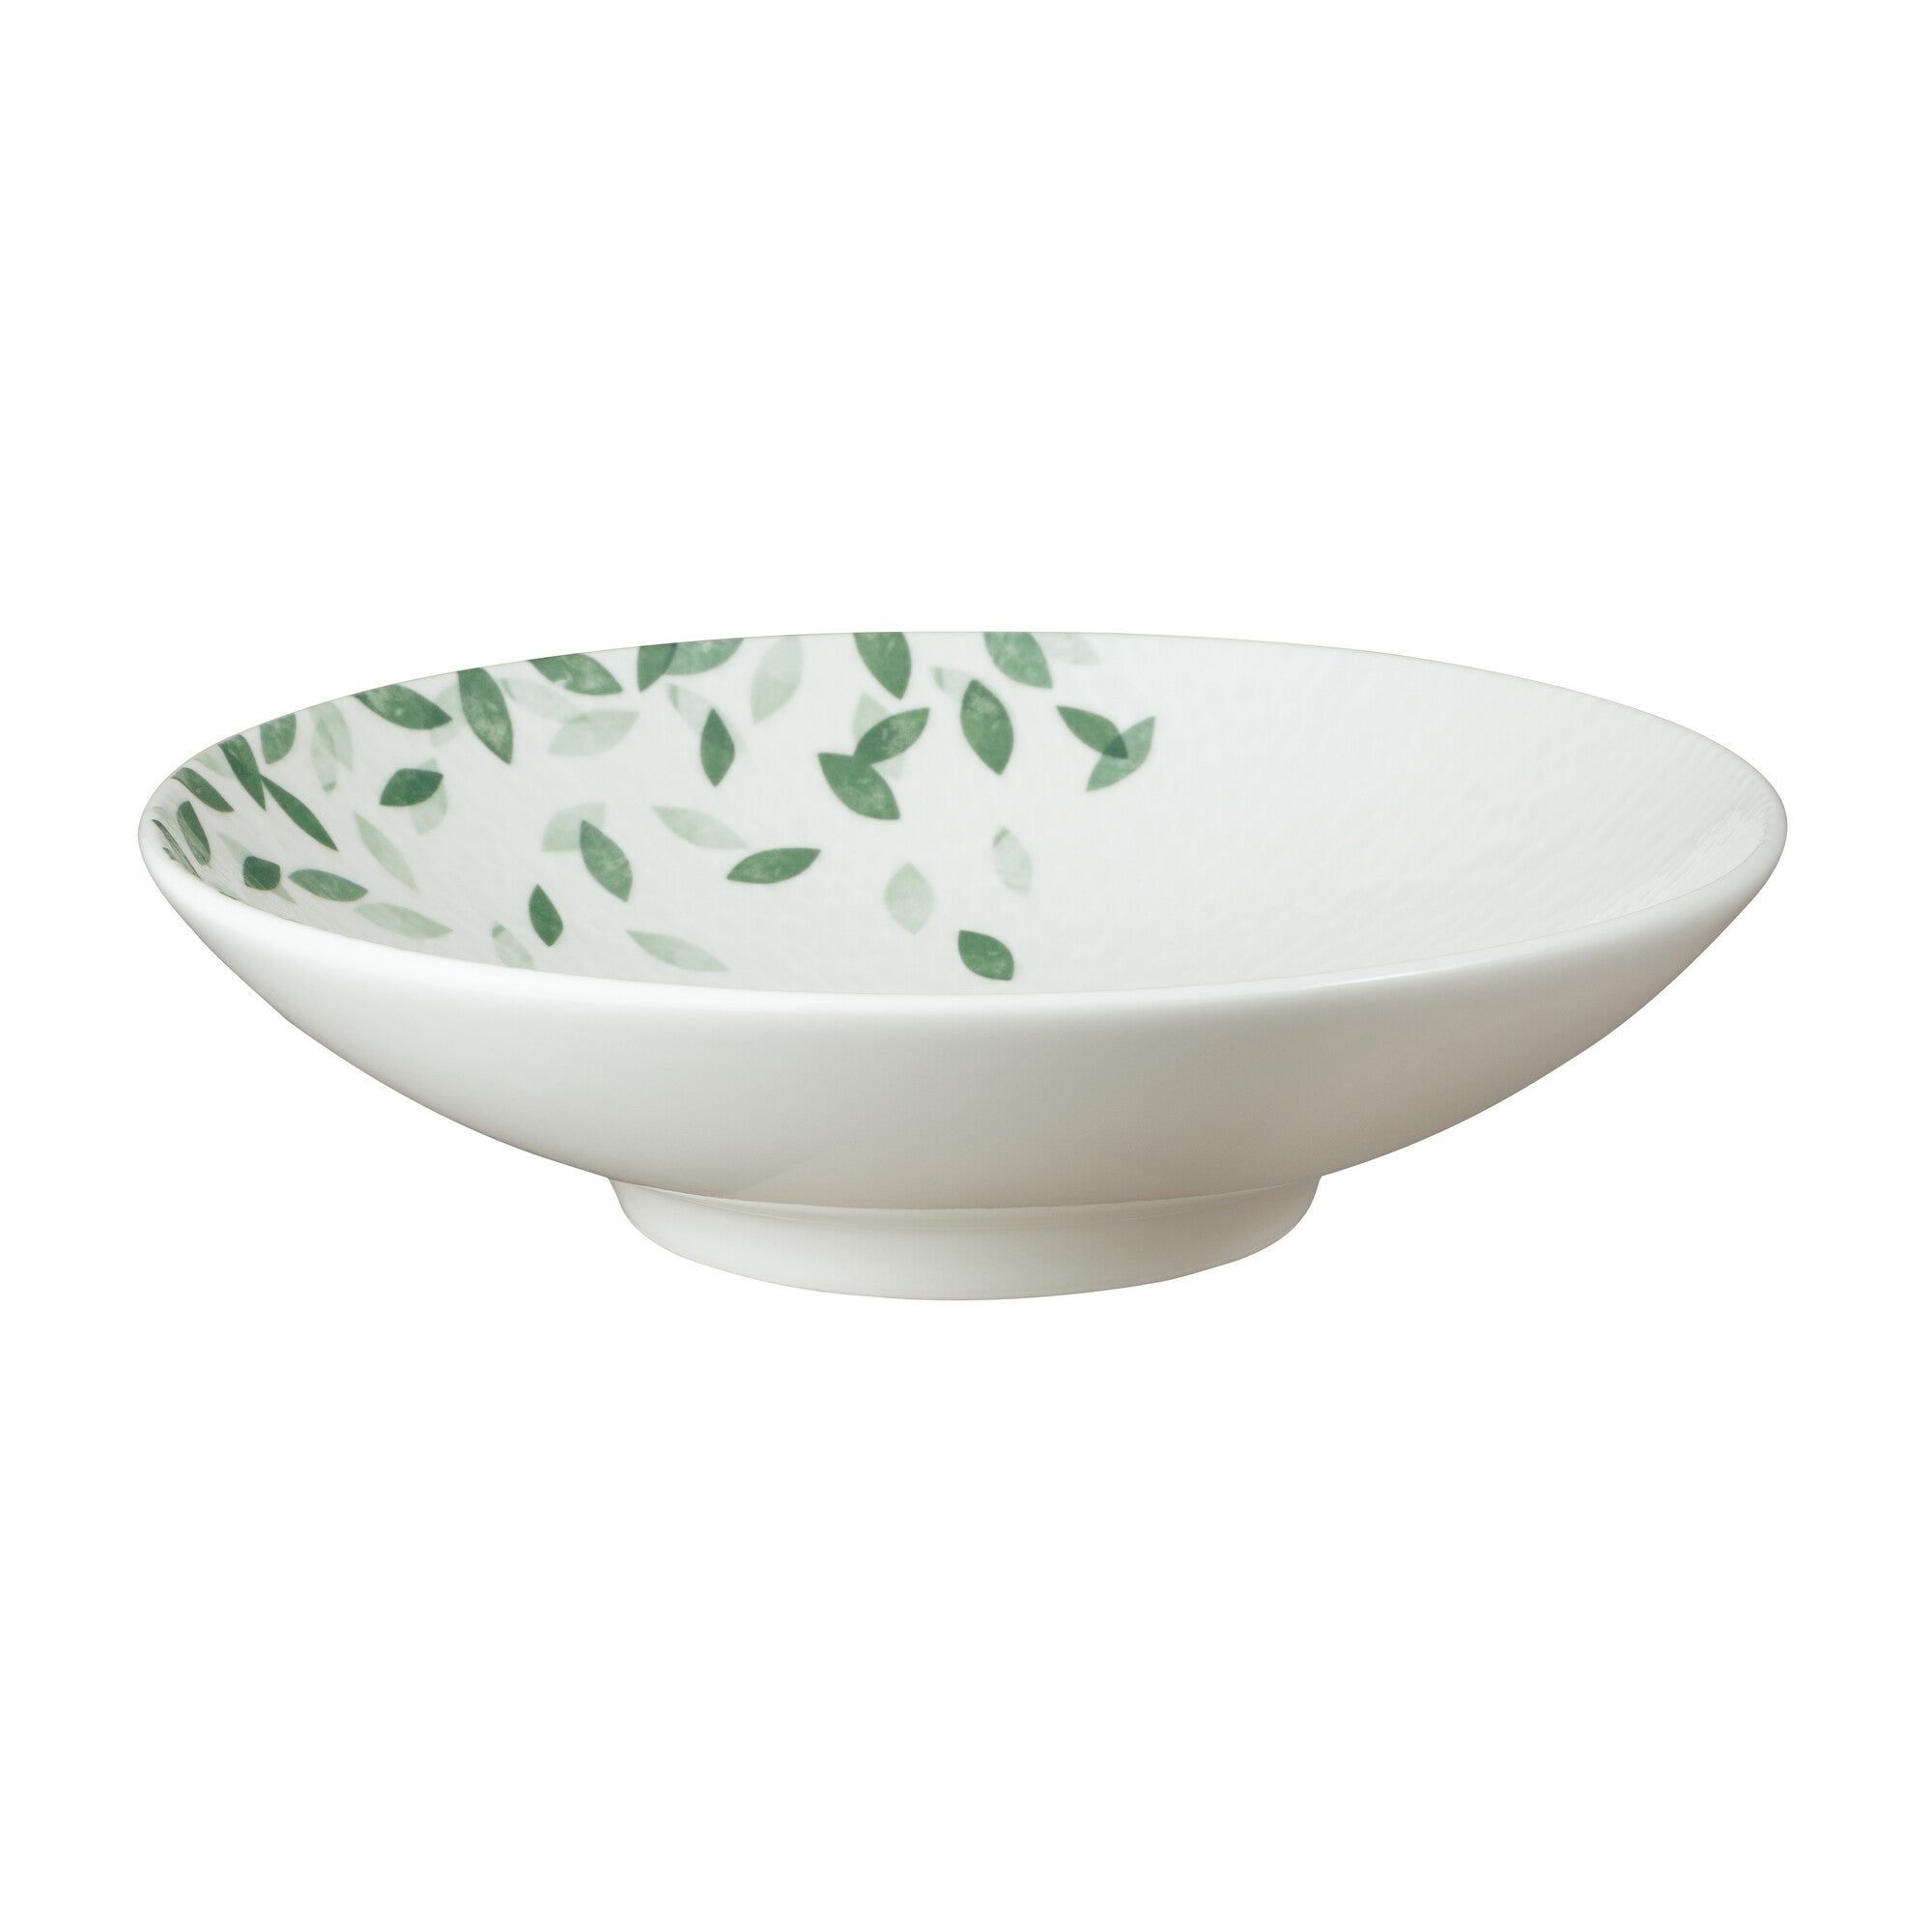 Denby Greenhouse Porcelain Pasta Bowl